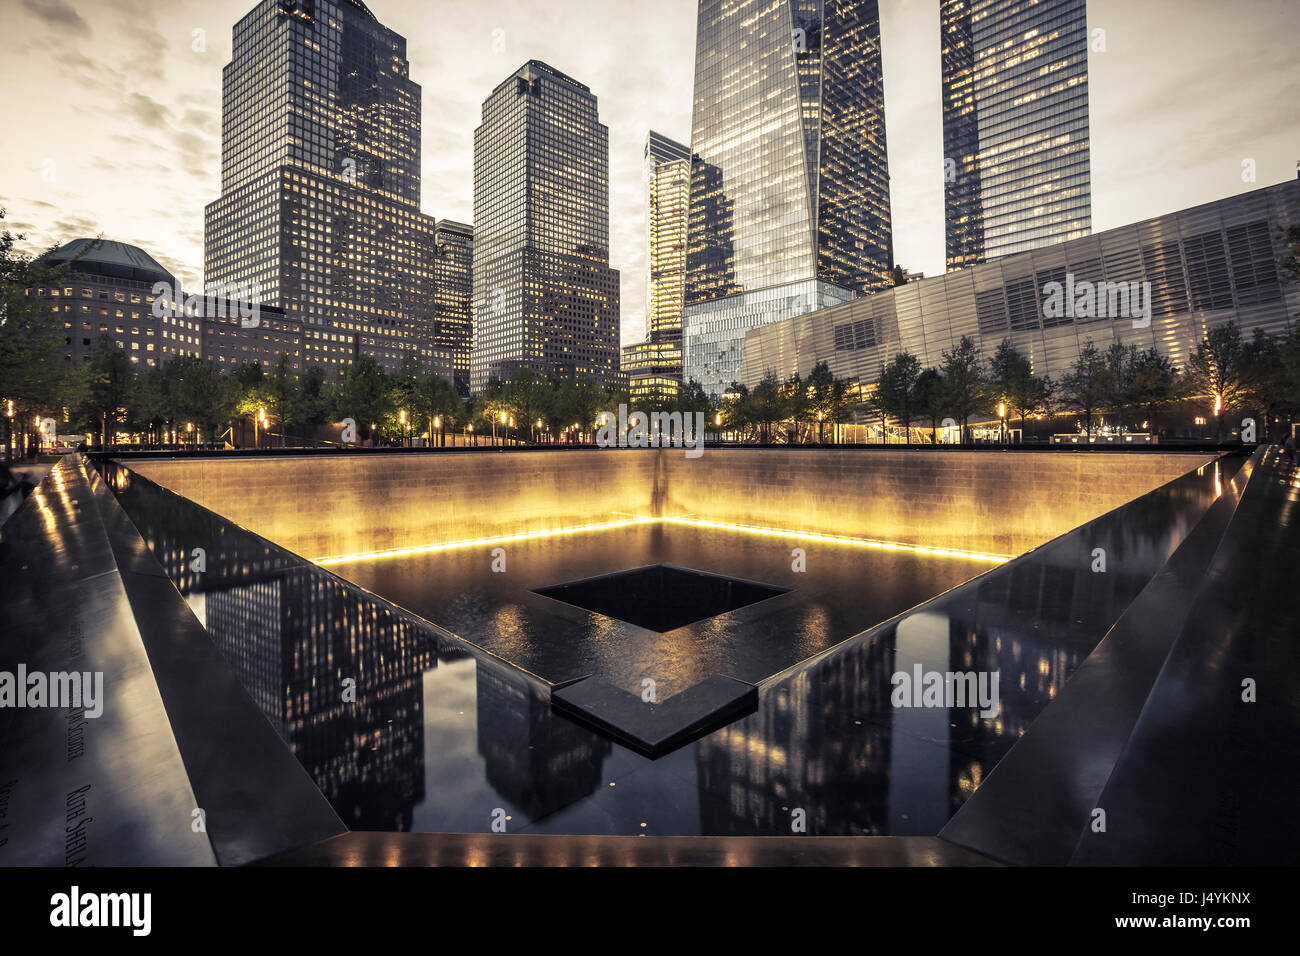 9/11 Memorial, The National September 11 Memorial & Museum, New York Stock Photo